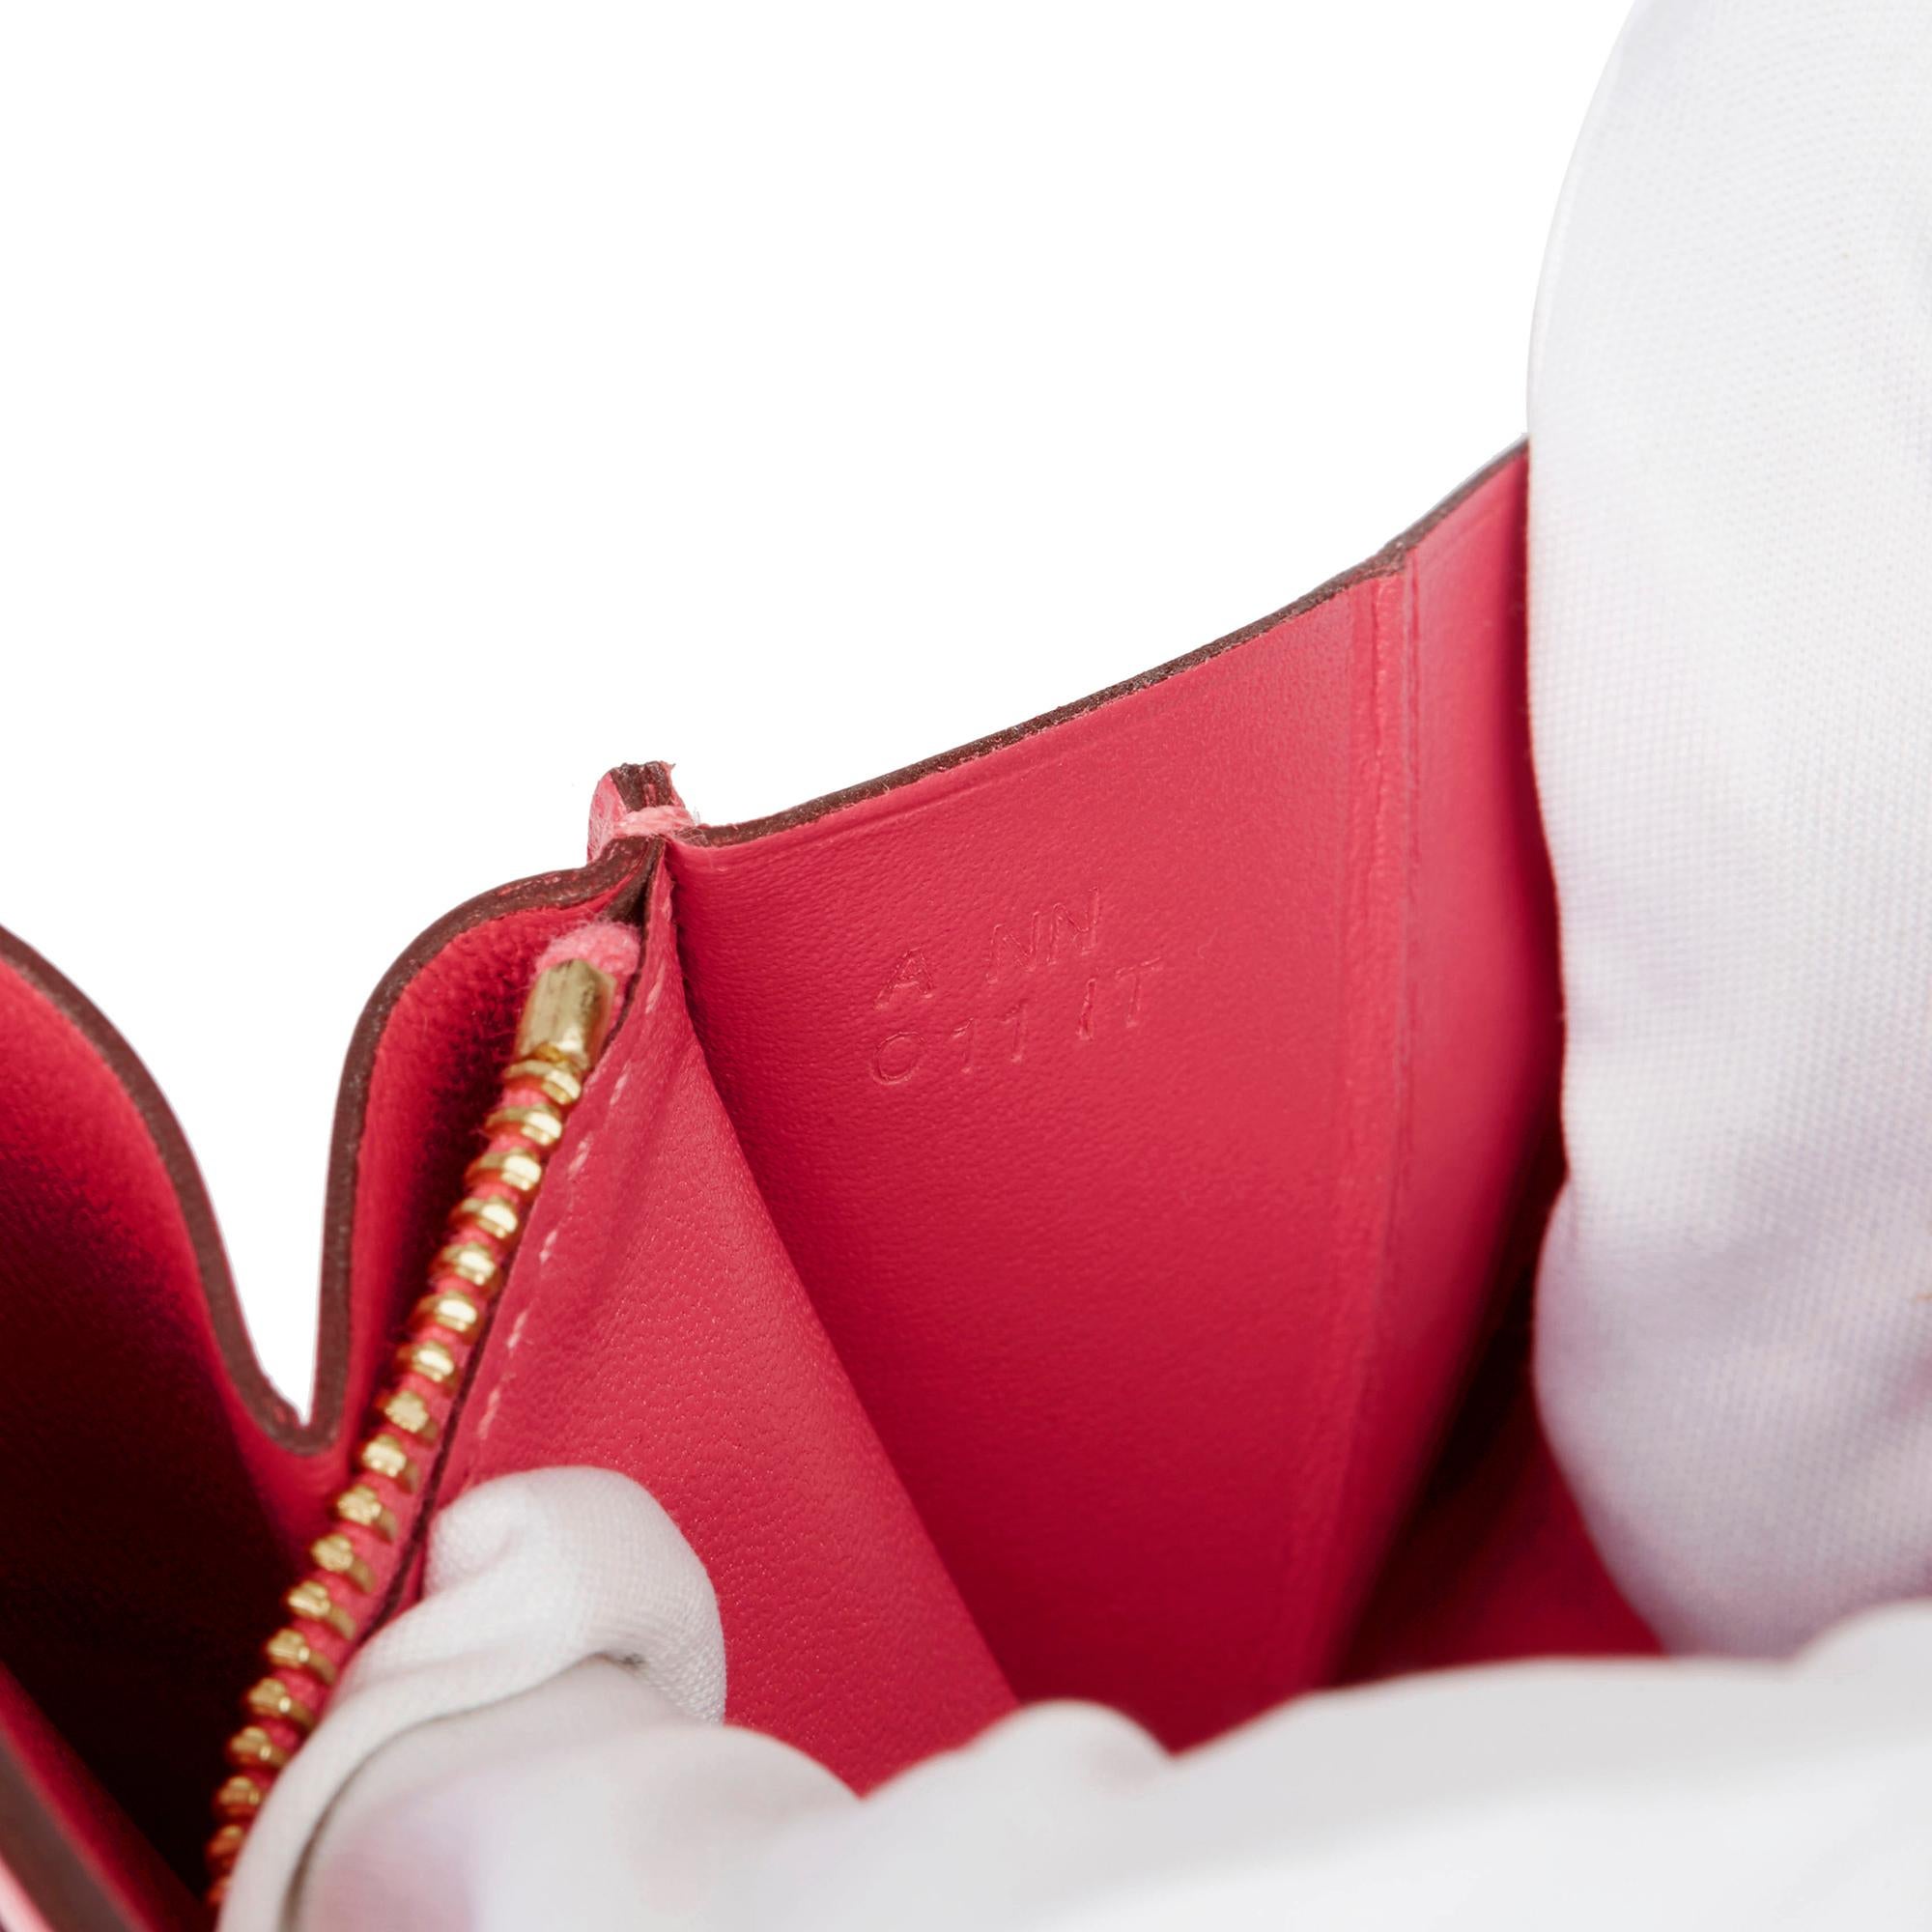 2017 Hermès Rose Lipstick Tadelakt Leather Constance Compact Wallet 3